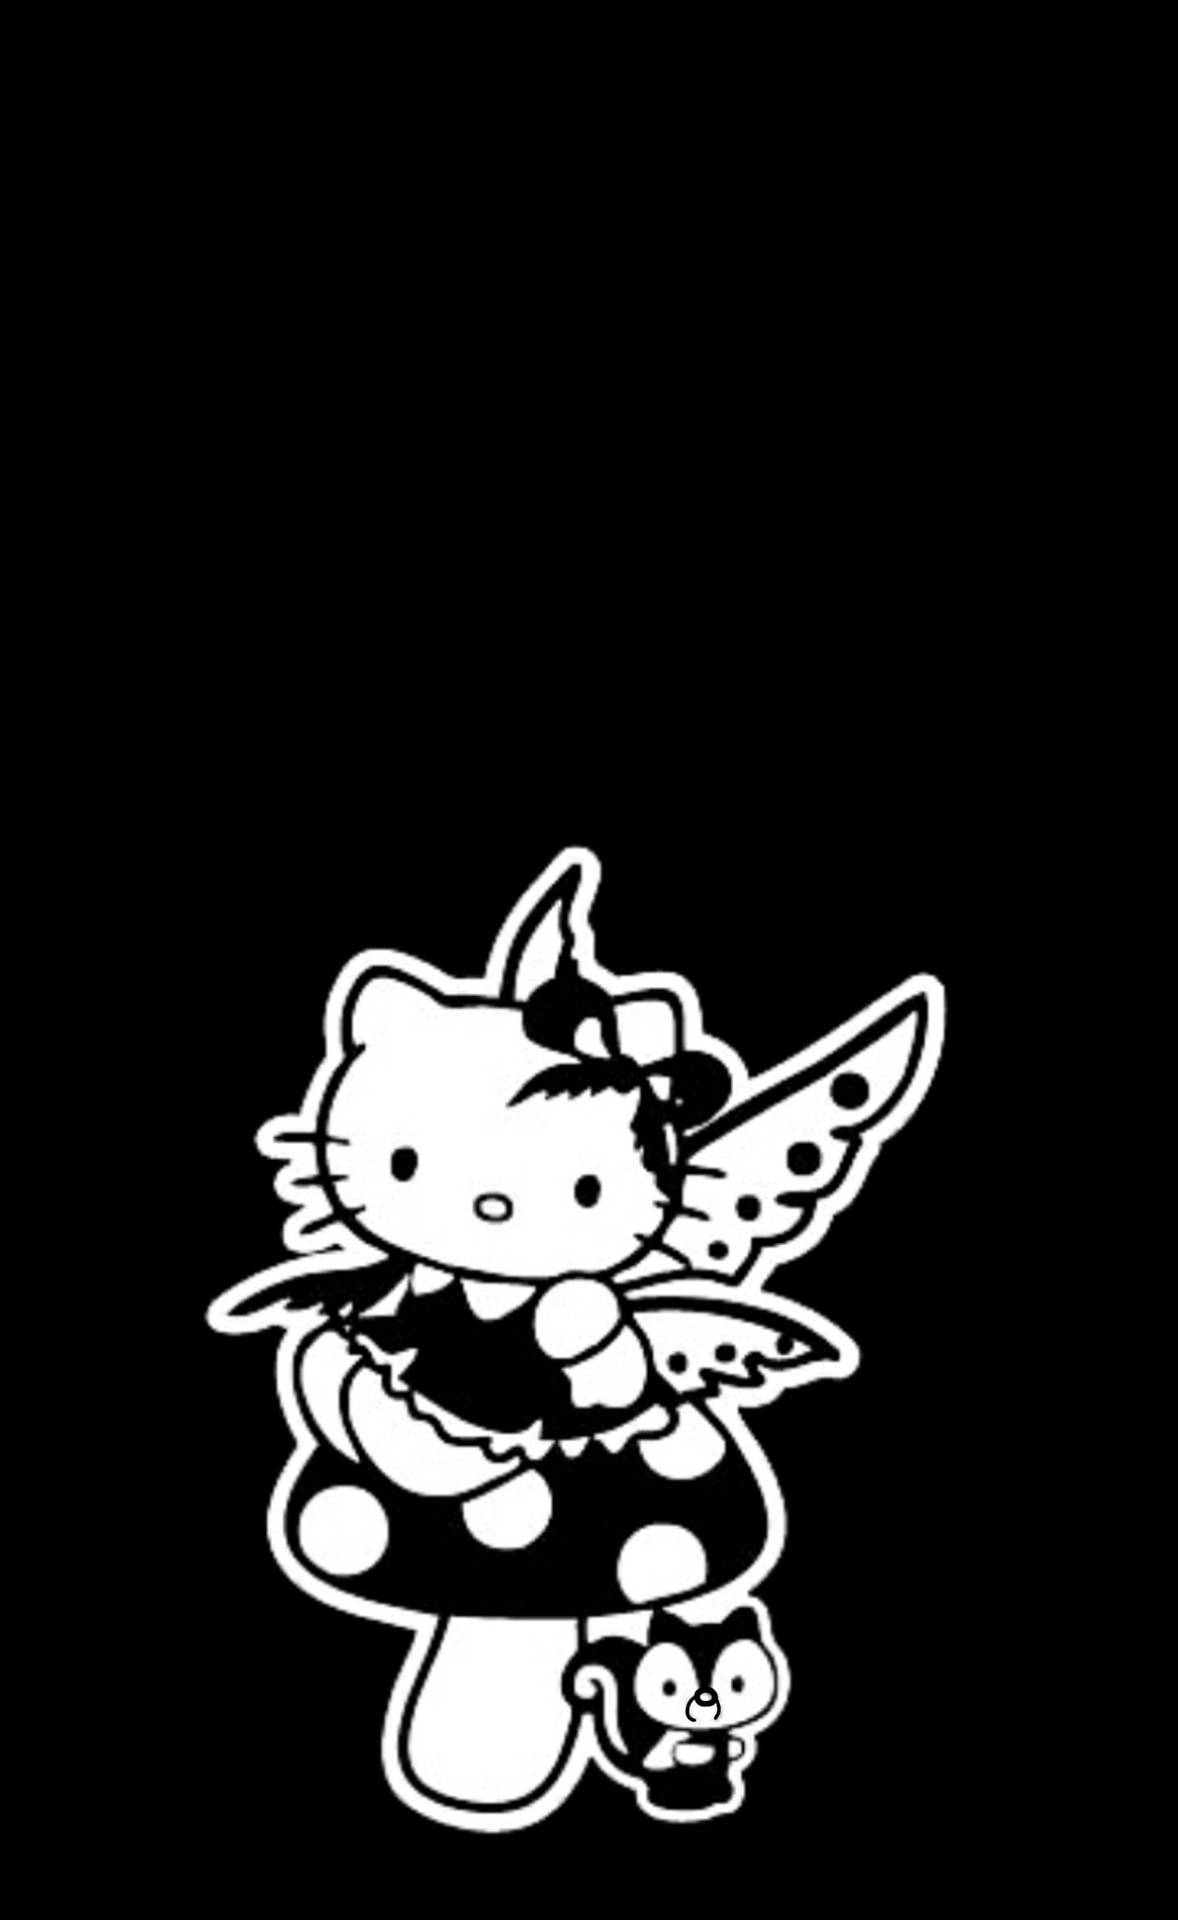 Download Black Hello Kitty In Fairy Costume Wallpaper 